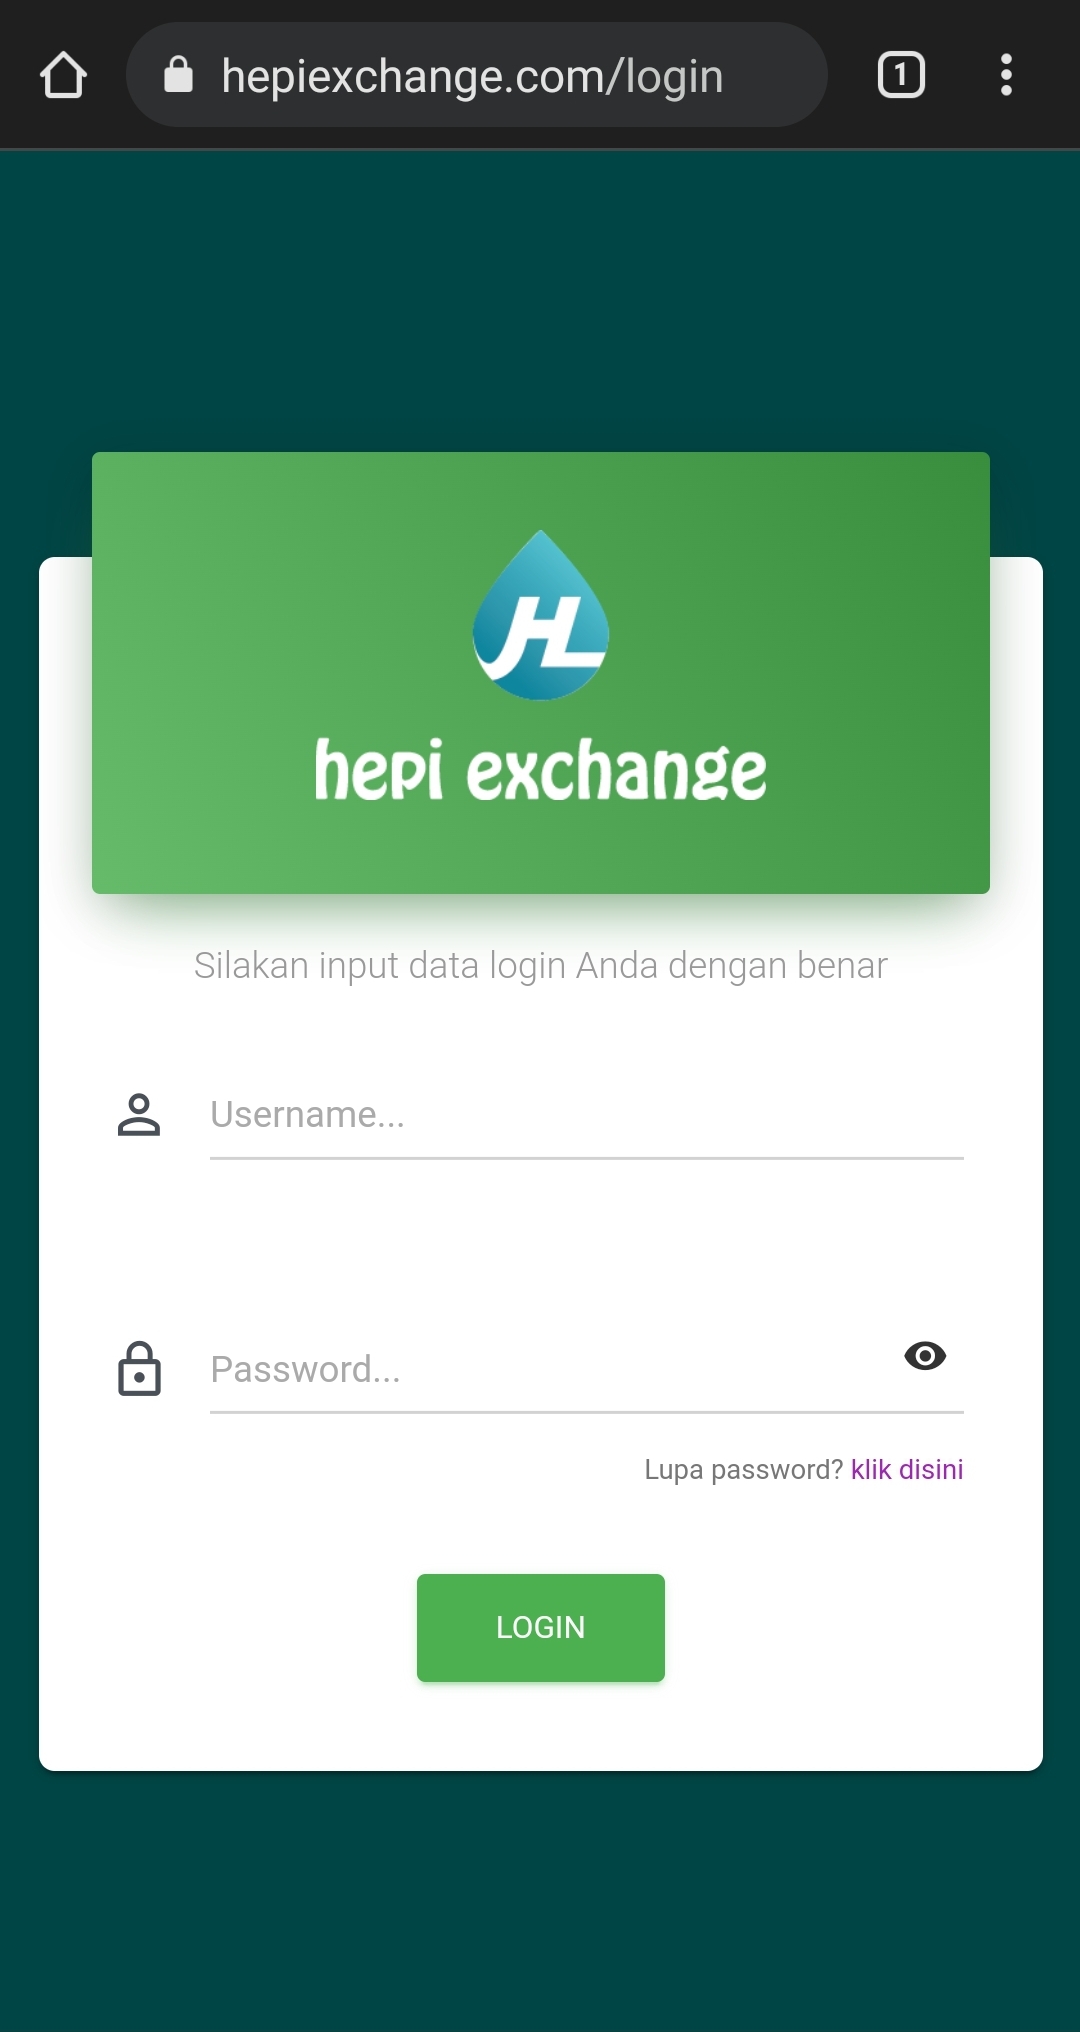 Hepi Exchange